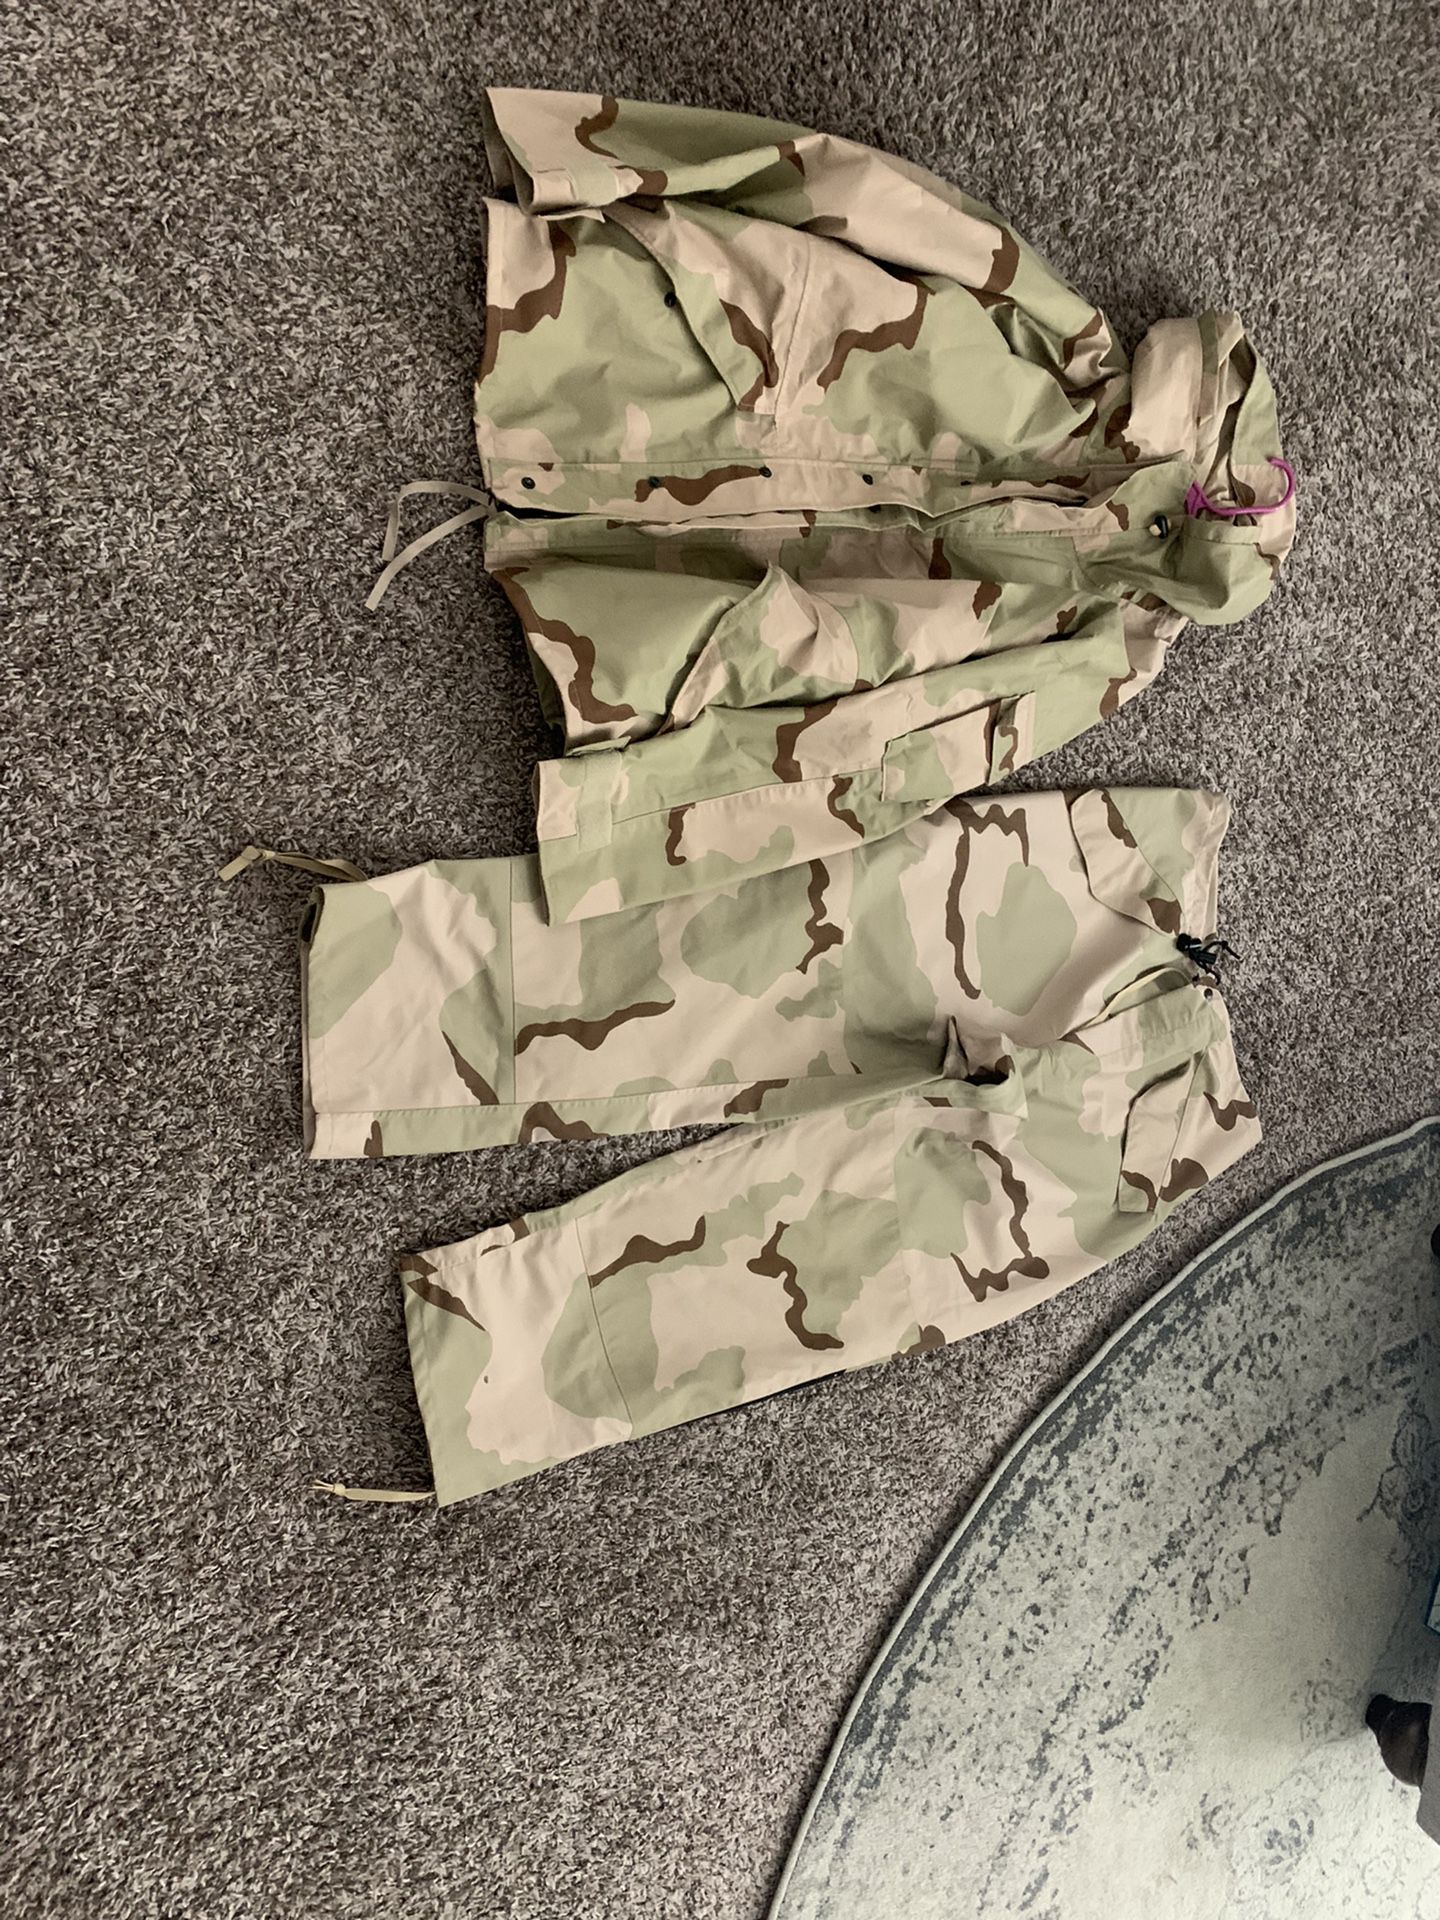 Desert Camo Military Gortex Jacket And Pant Set 